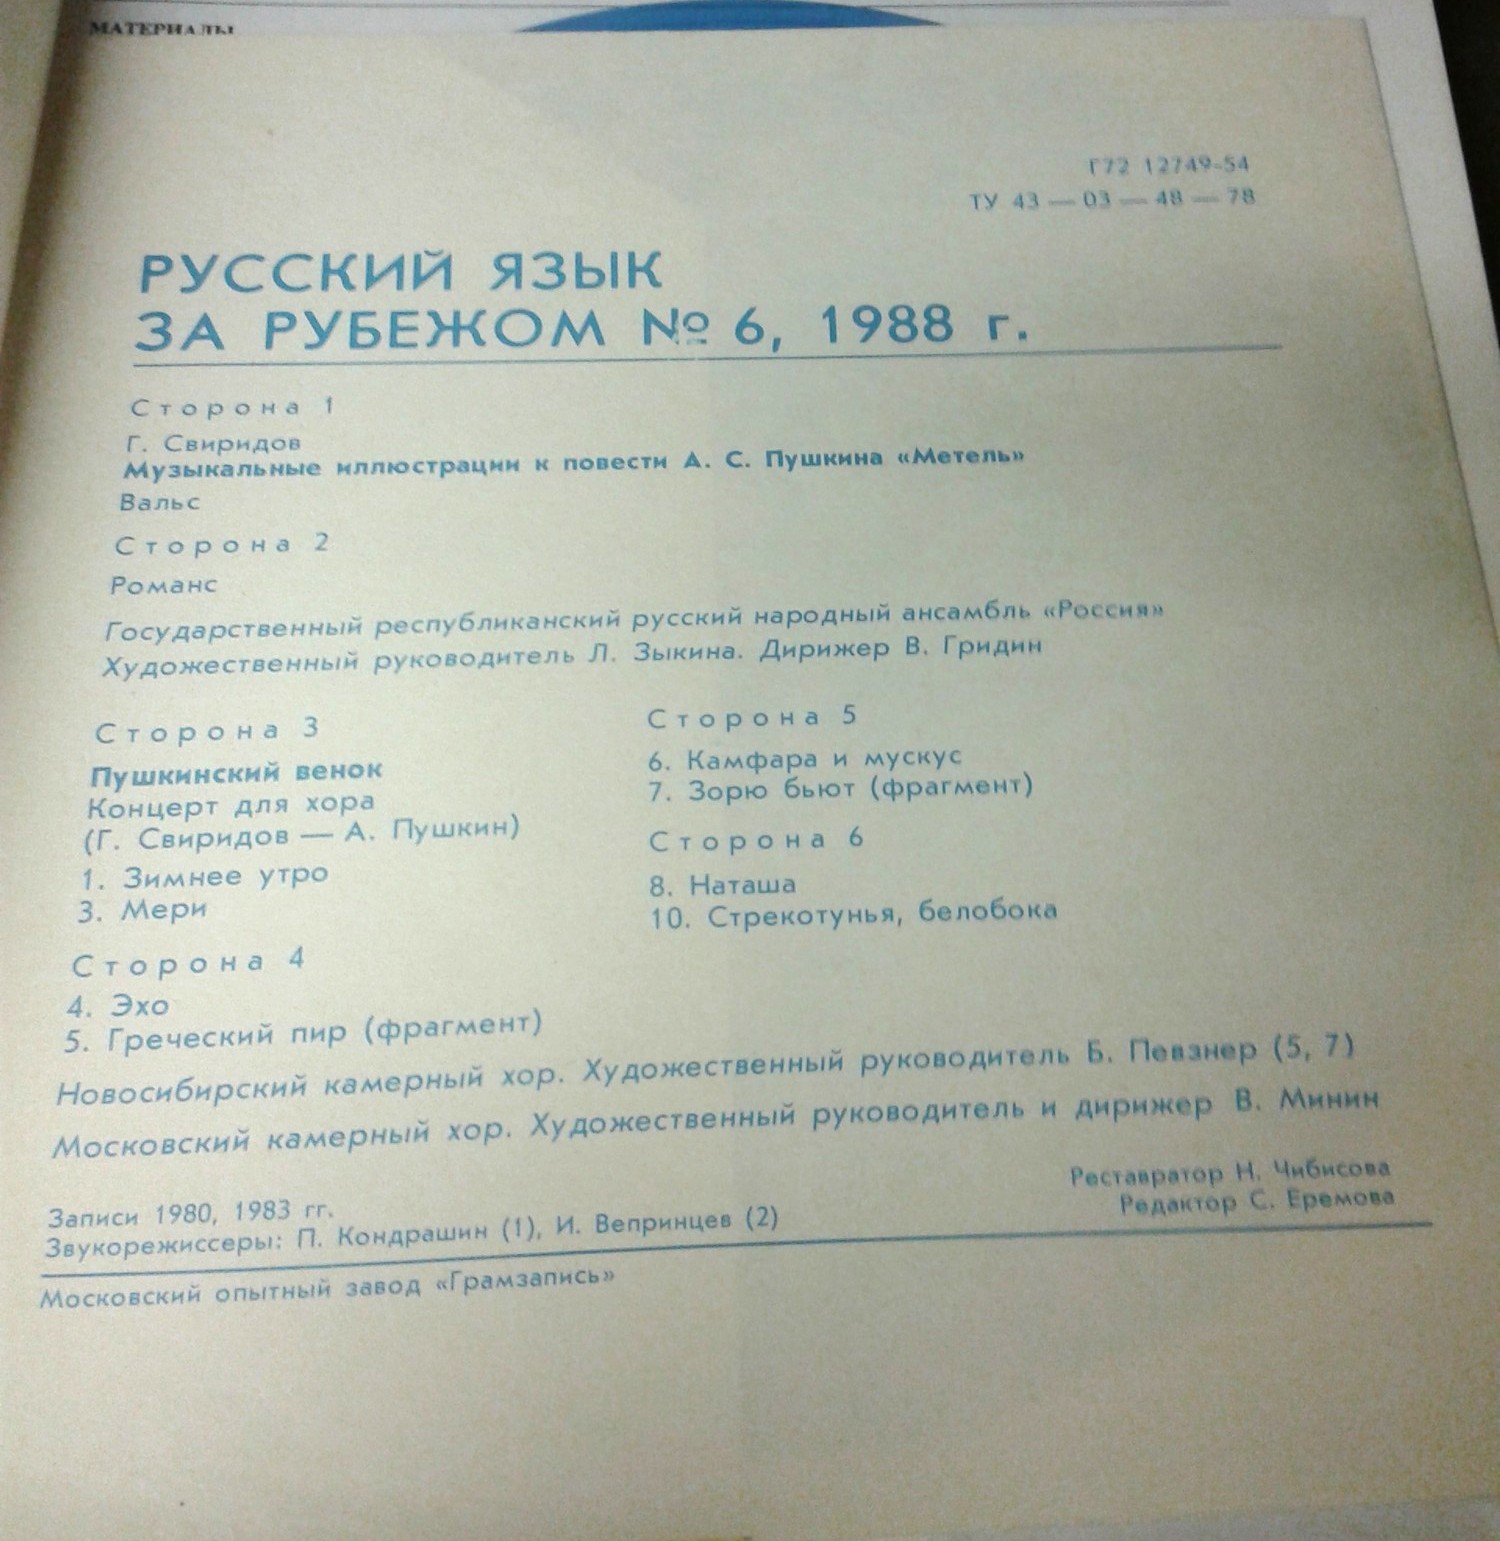 "РУССКИЙ ЯЗЫК ЗА РУБЕЖОМ", № 6 - 1988